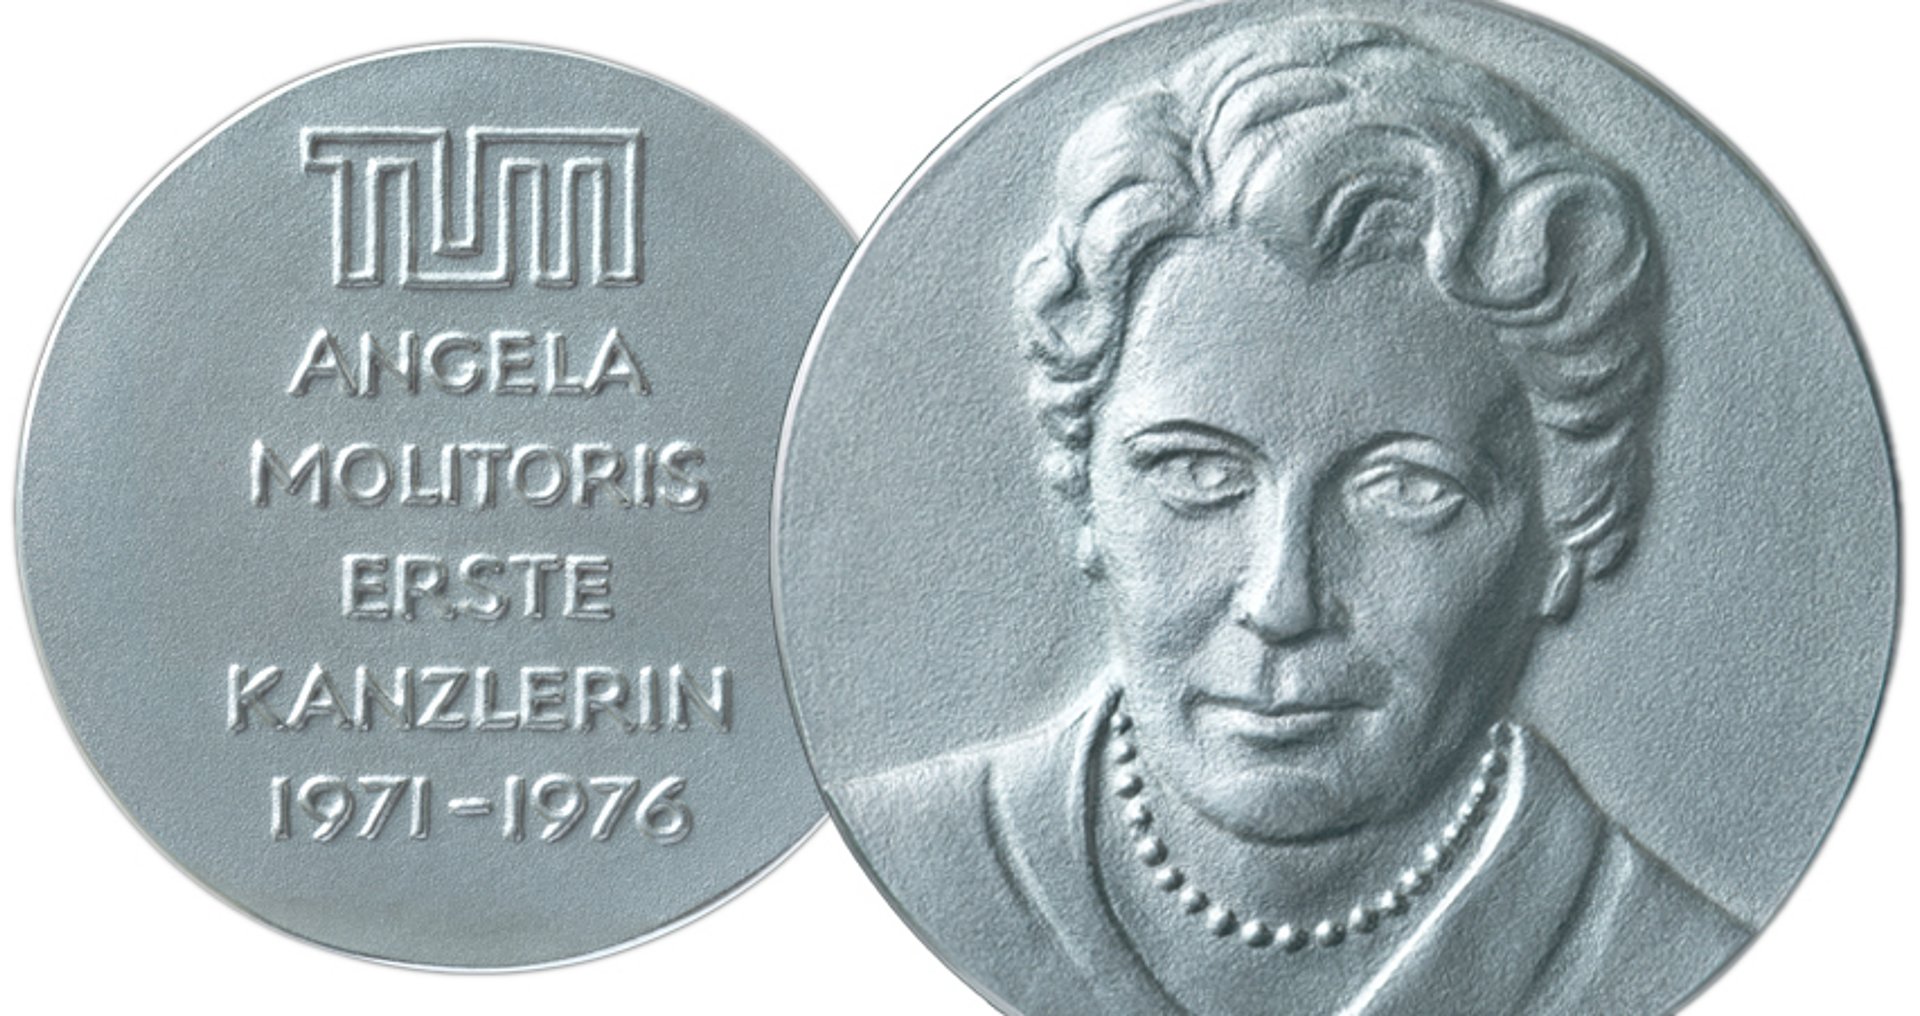 The medal bearing the portrait of Angela Molitoris